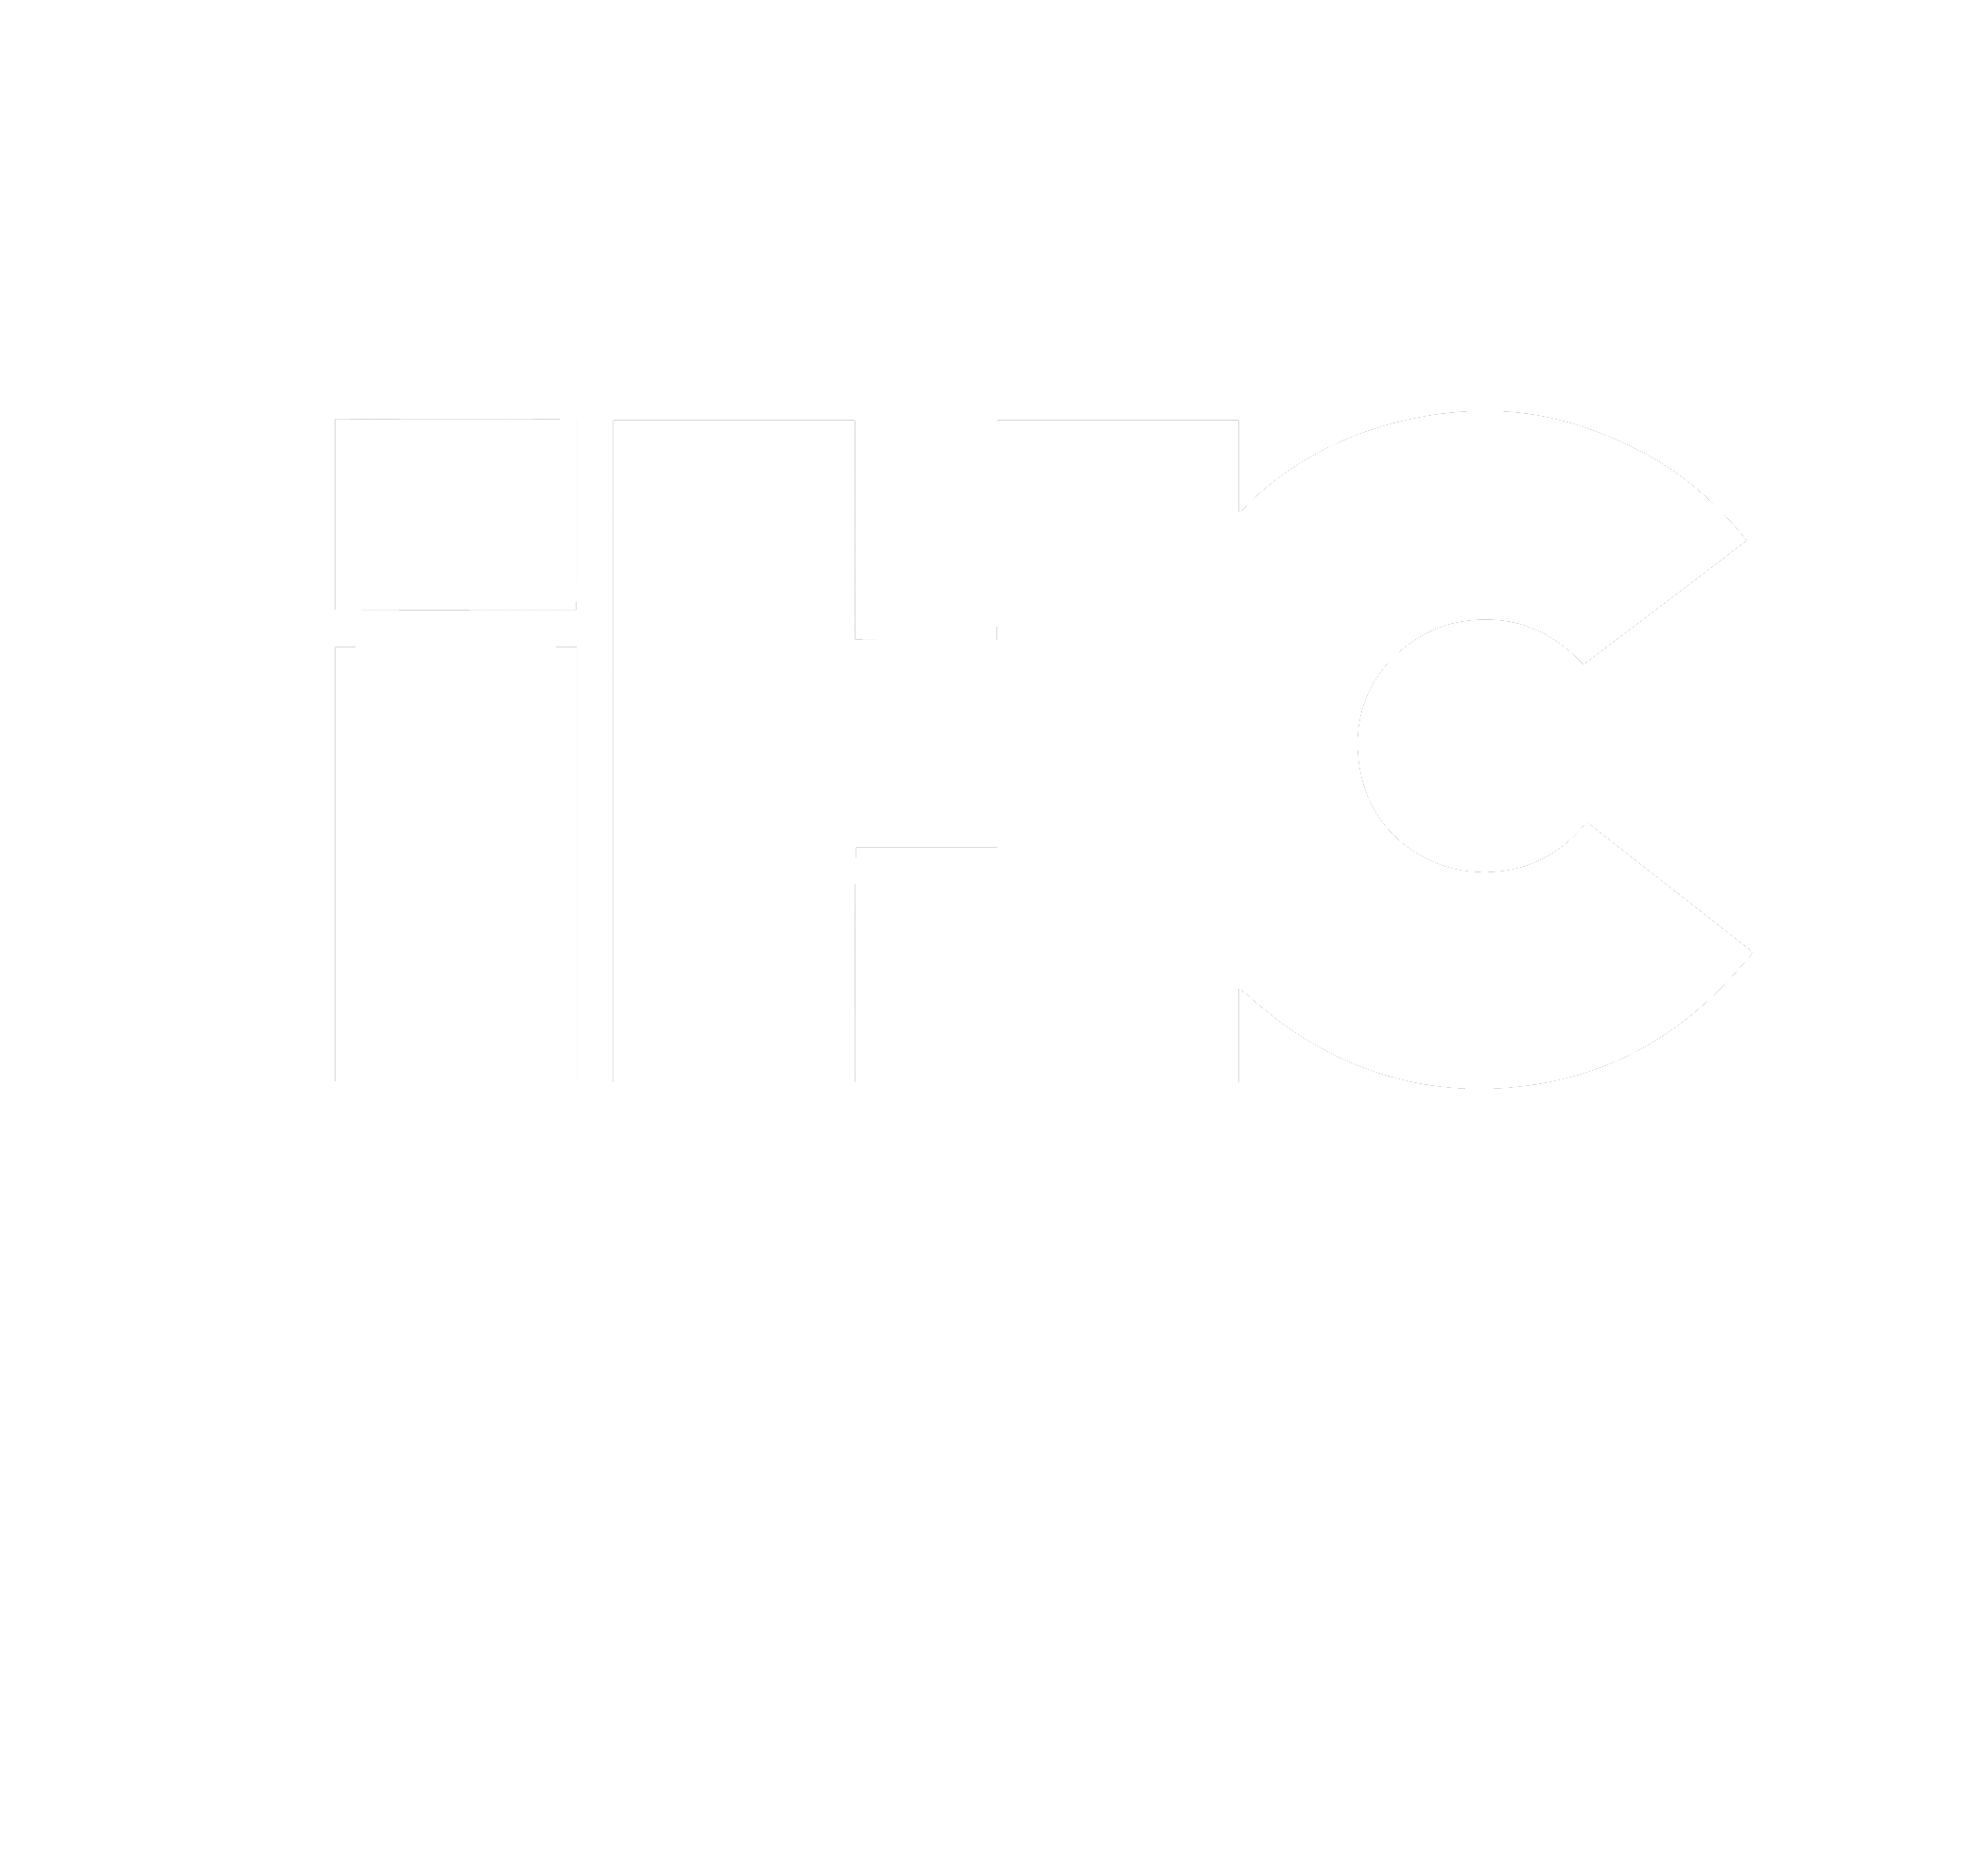 IHC-LOGO-white